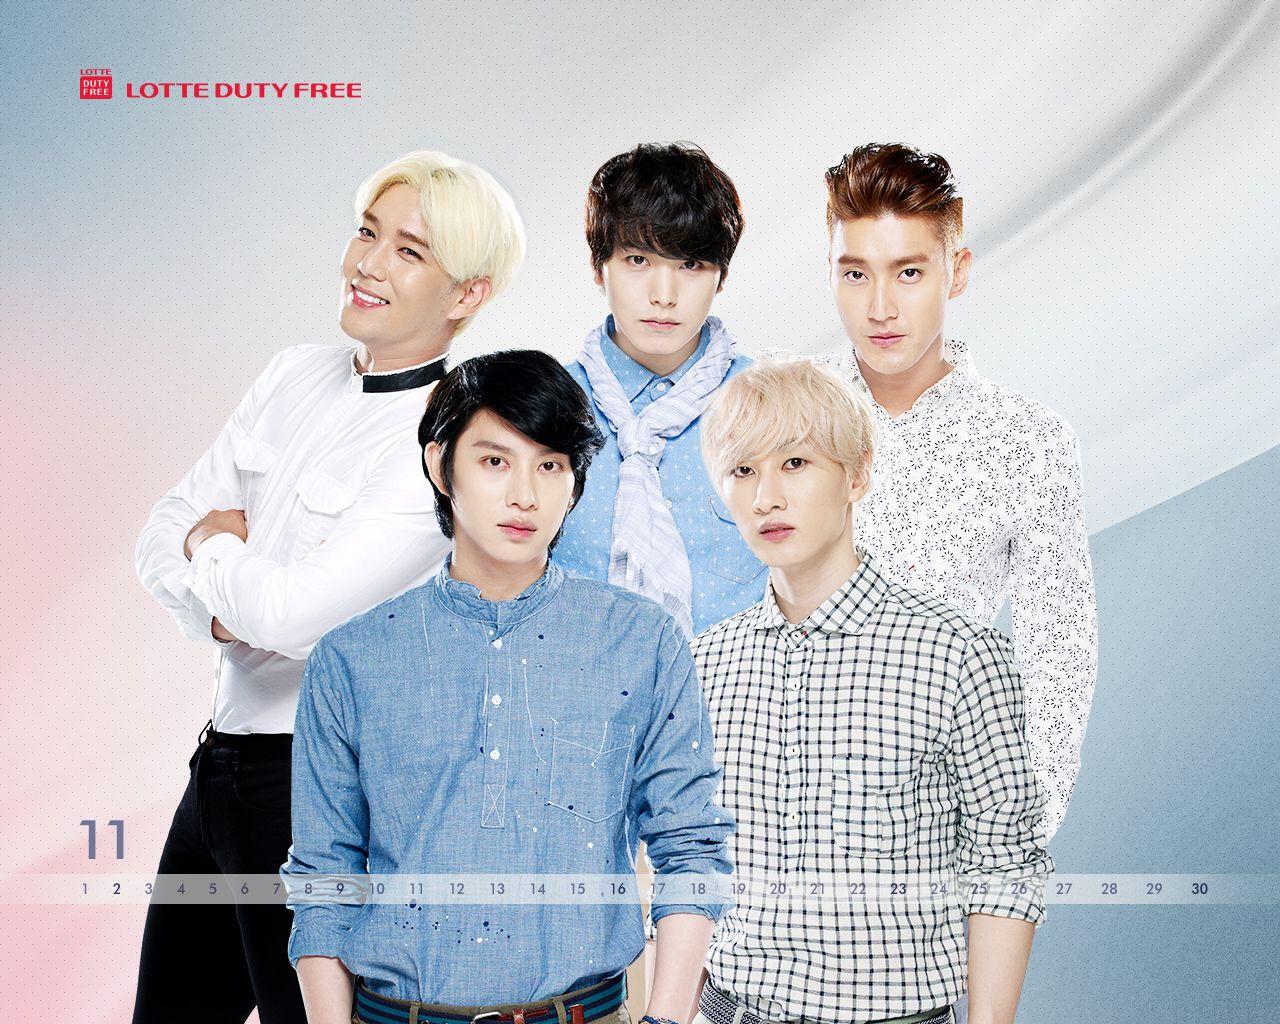 Lotte Duty Free November Wallpaper with Super Junior [2P]